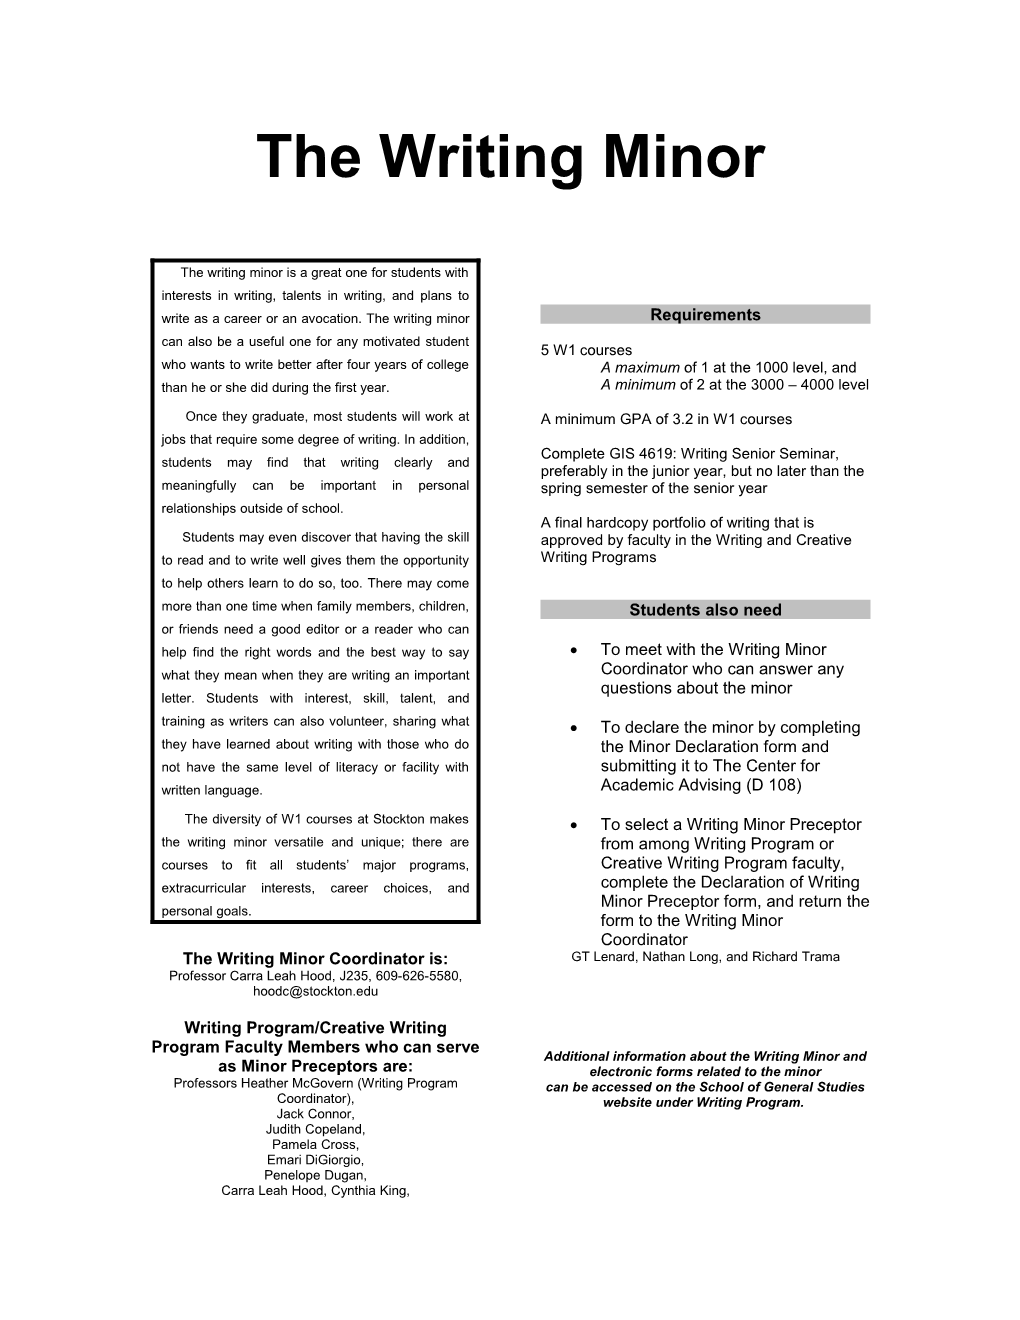 The Writing Minor